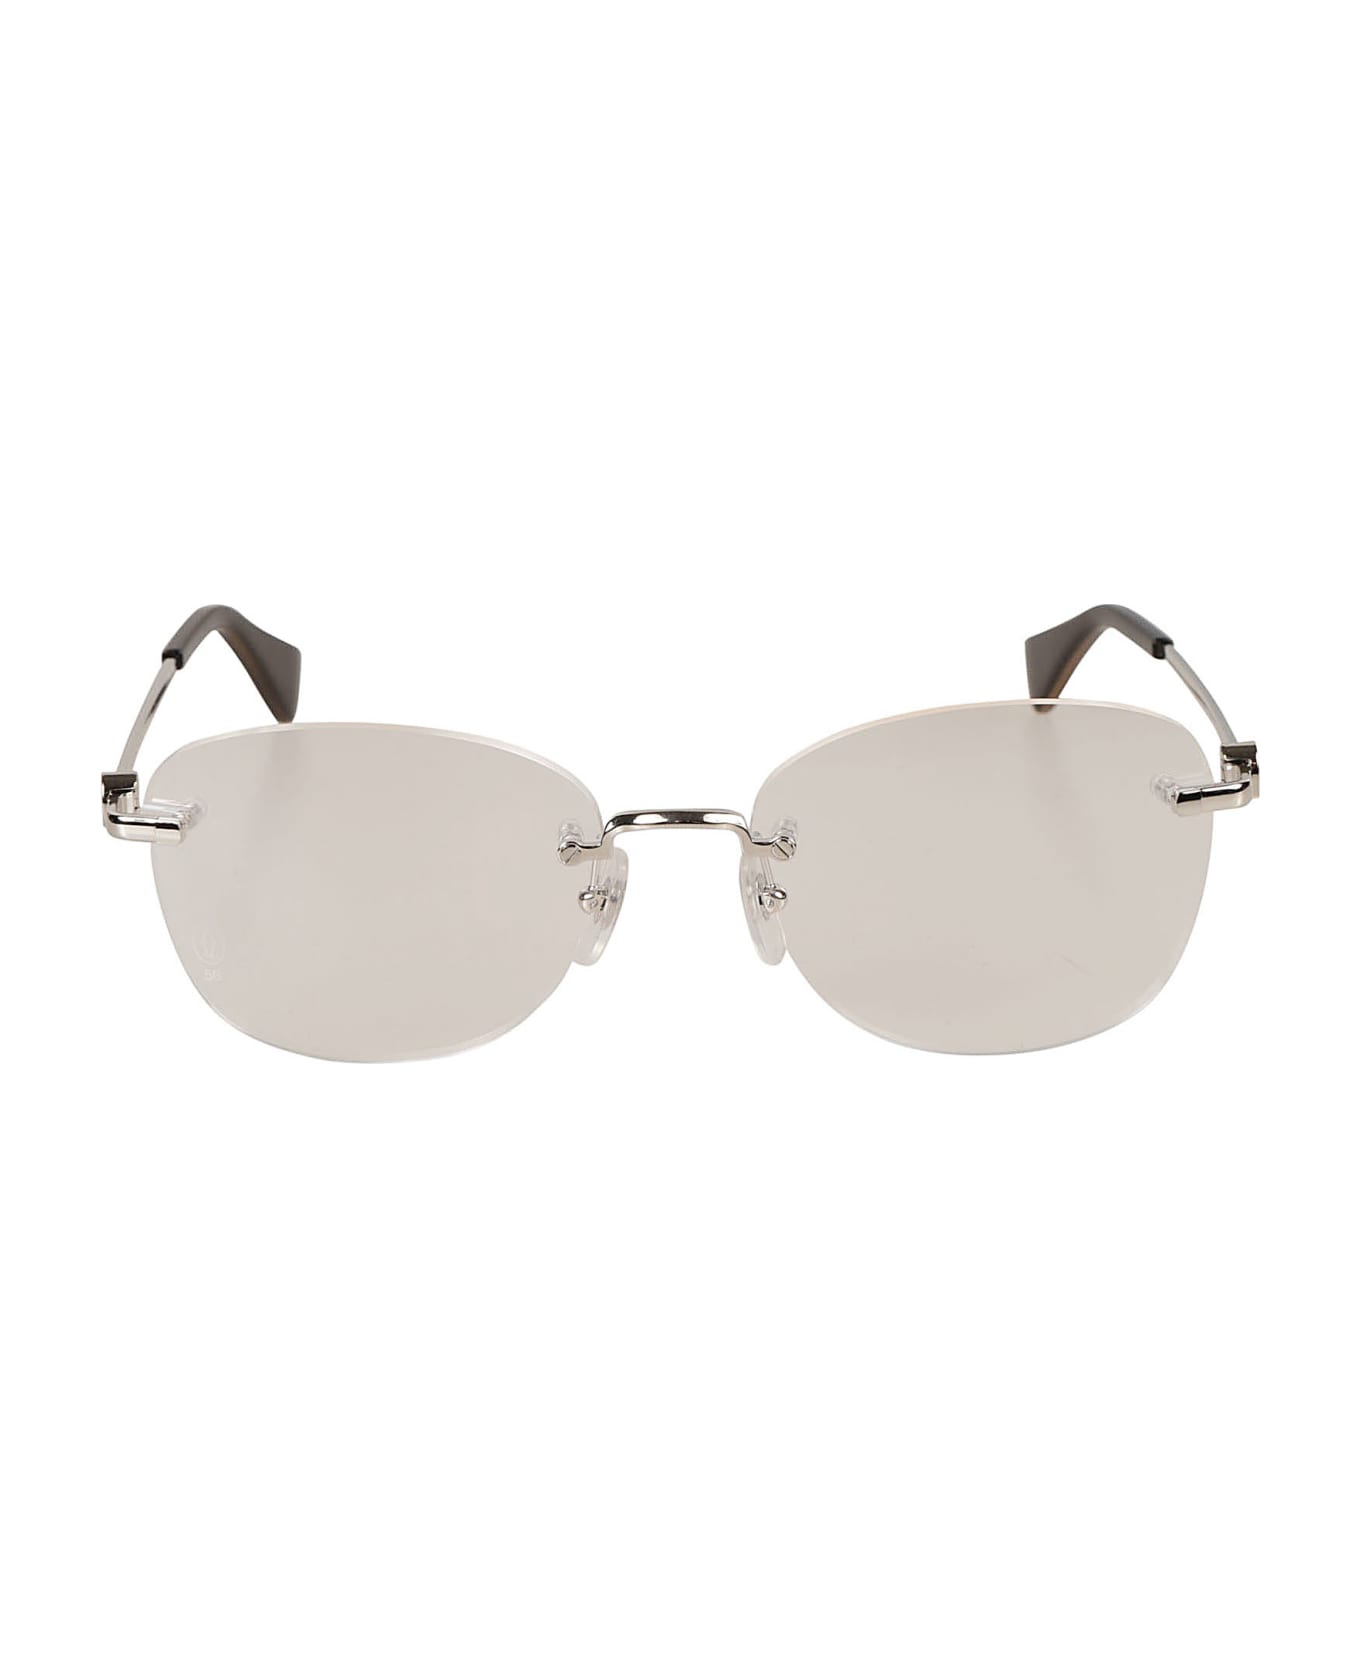 Cartier Eyewear Wayfarer Frame Glasses - Silver アイウェア